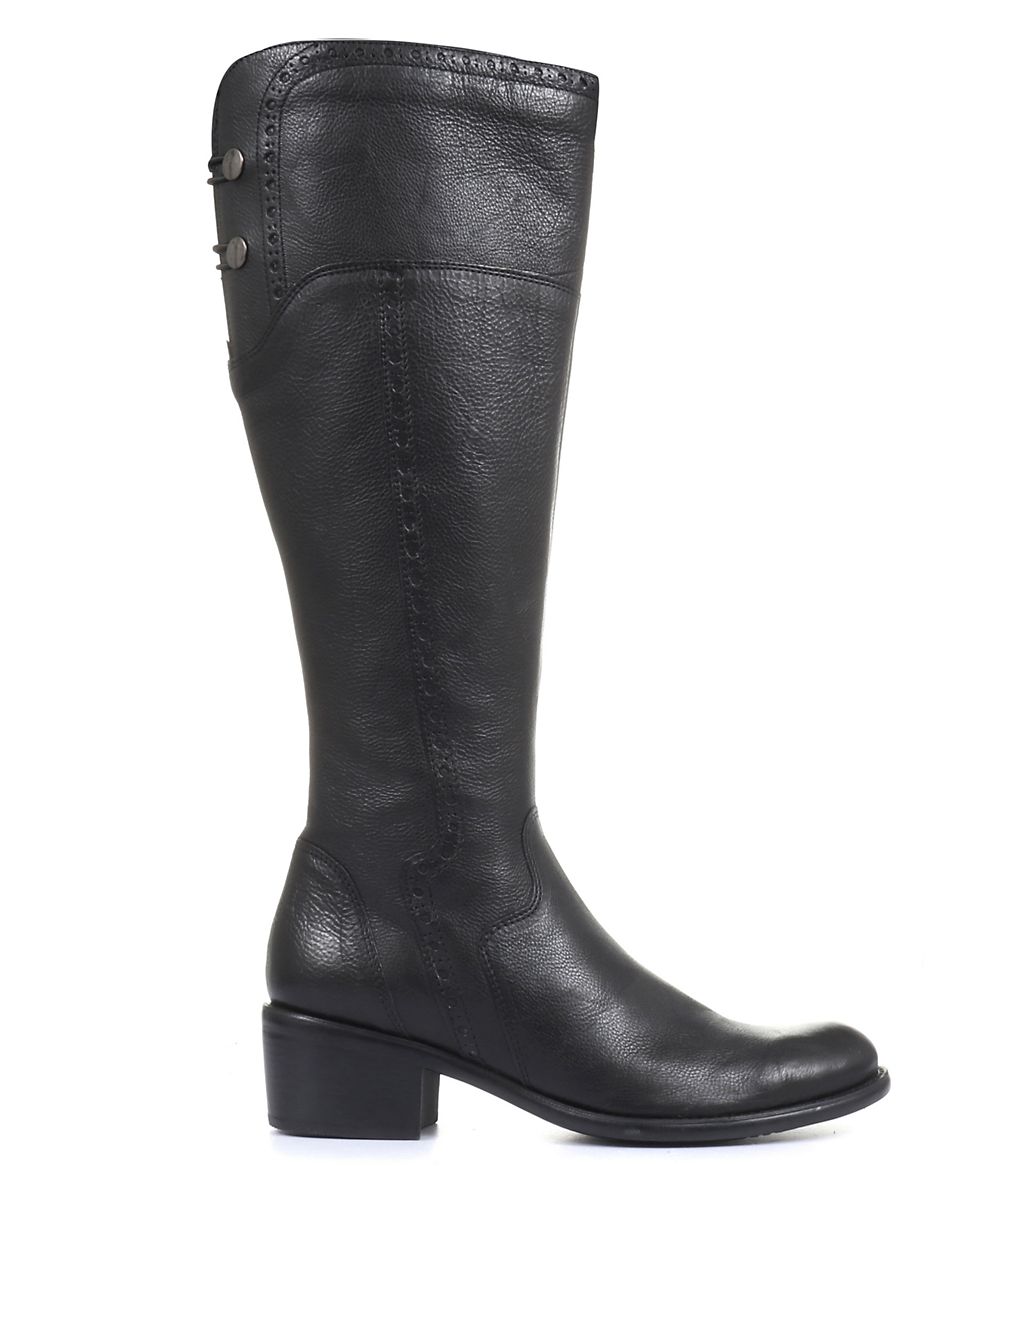 Leather Knee High Boots | Jones Bootmaker | M&S